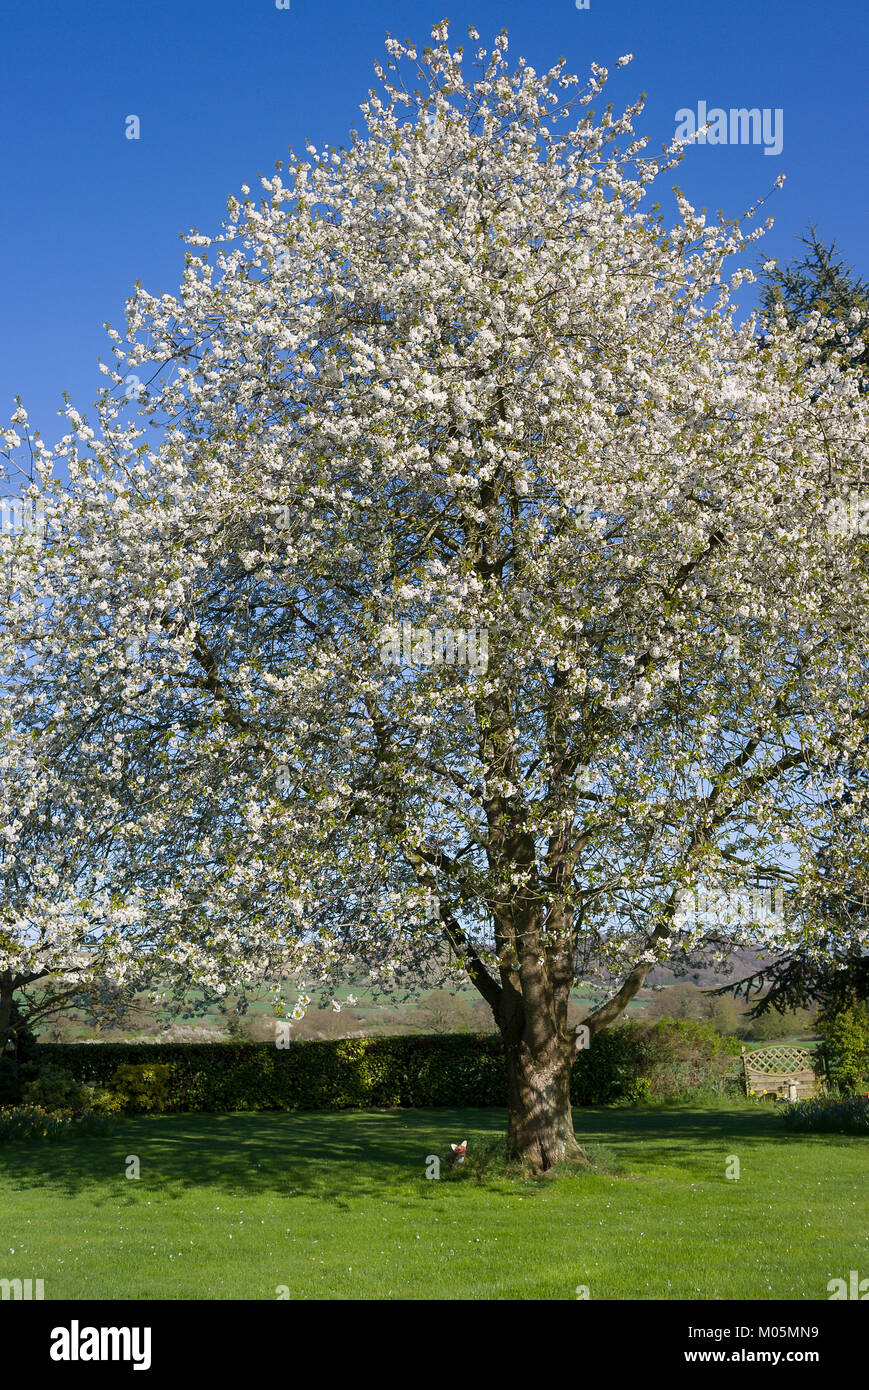 White blossom of a wild cherry tree Prunus avium flowering in April in an English garden Stock Photo